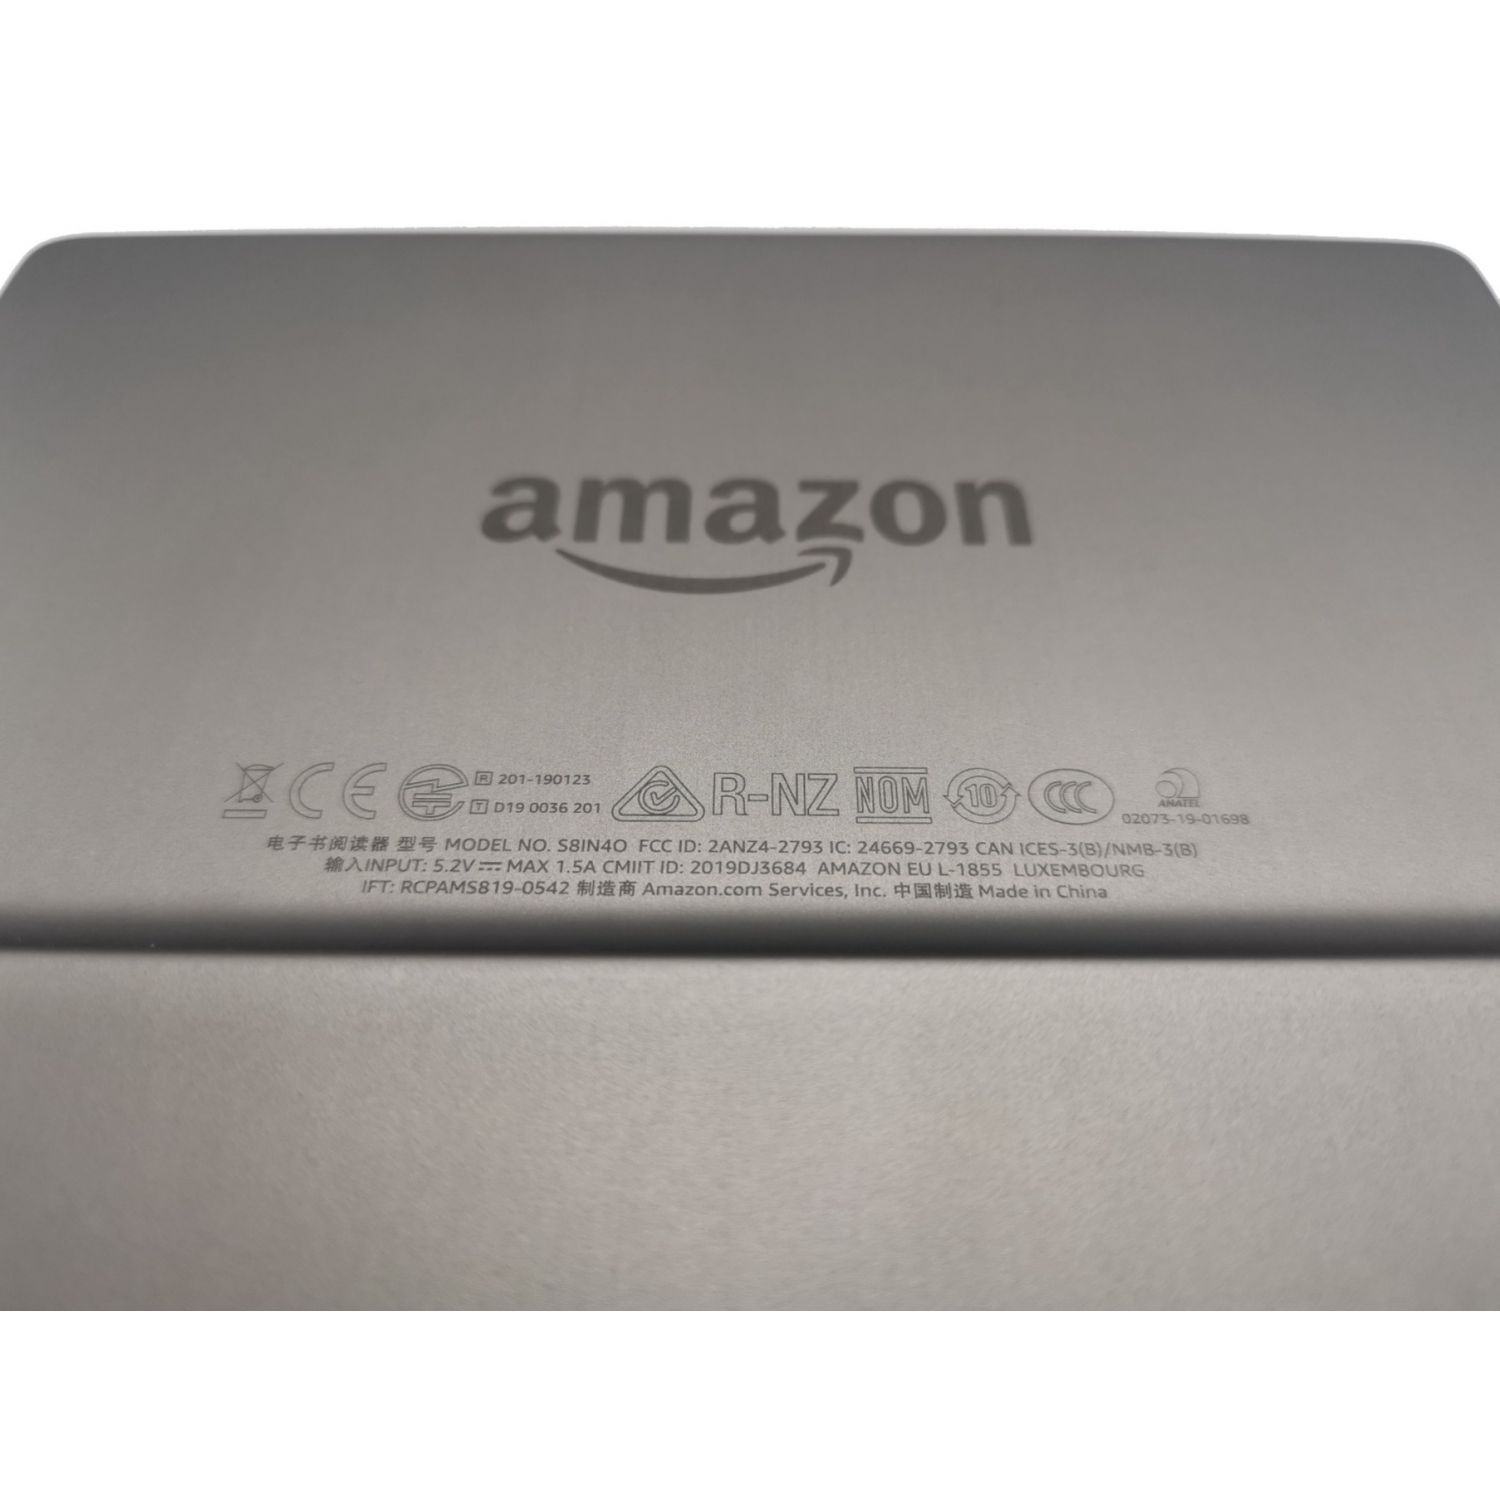 amazon (アマゾン) Kindle Oasis 第10世代 G000 WL05 0477 0M5N